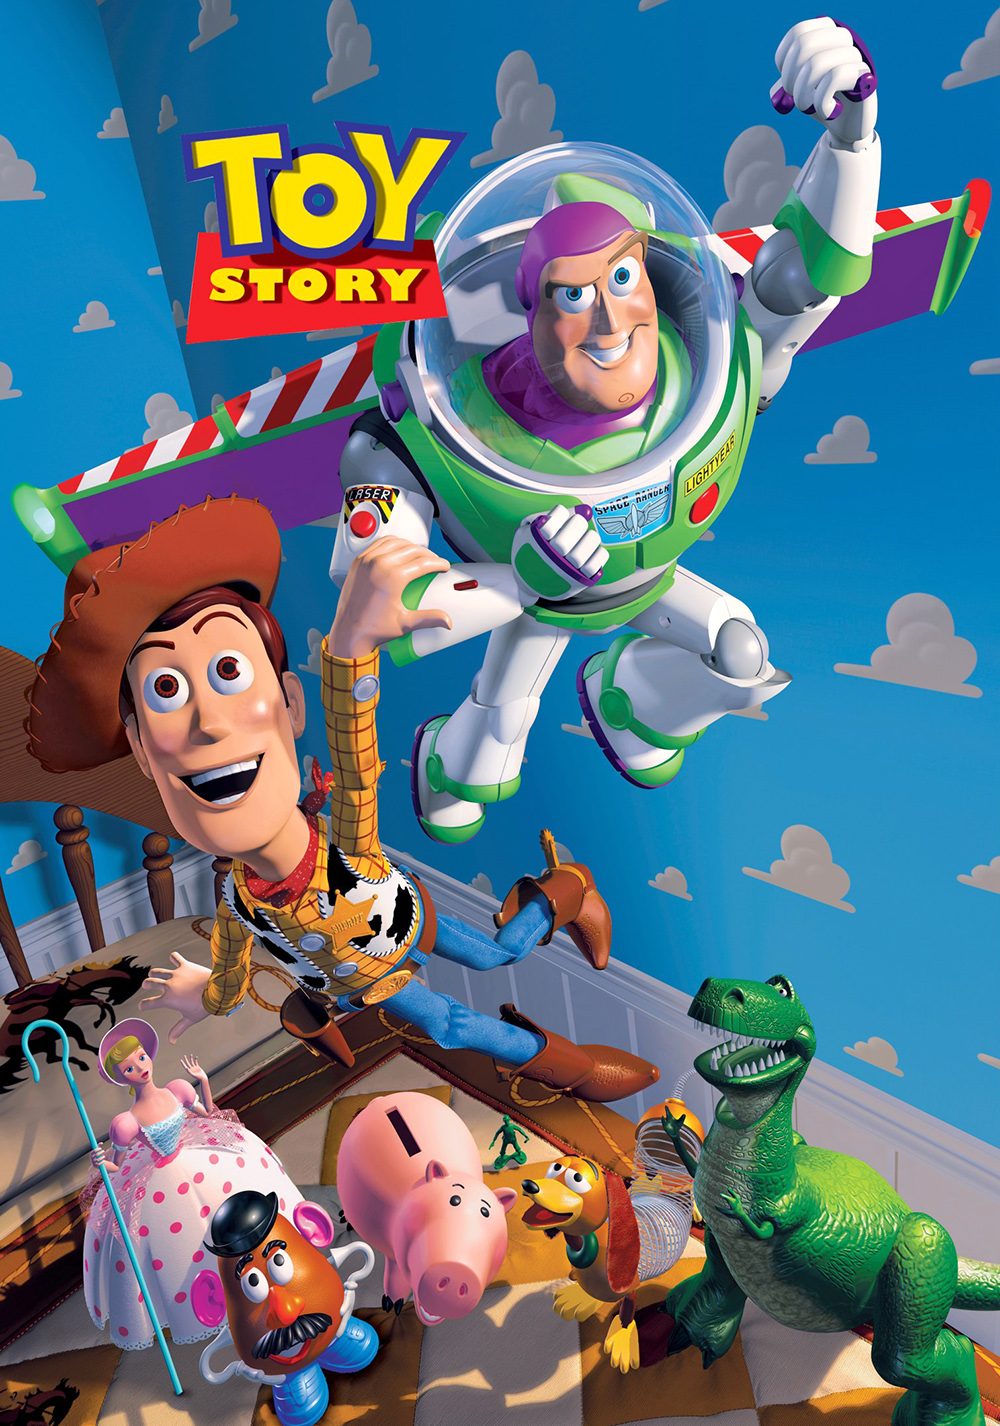 toy story 1 full movie dailymotion